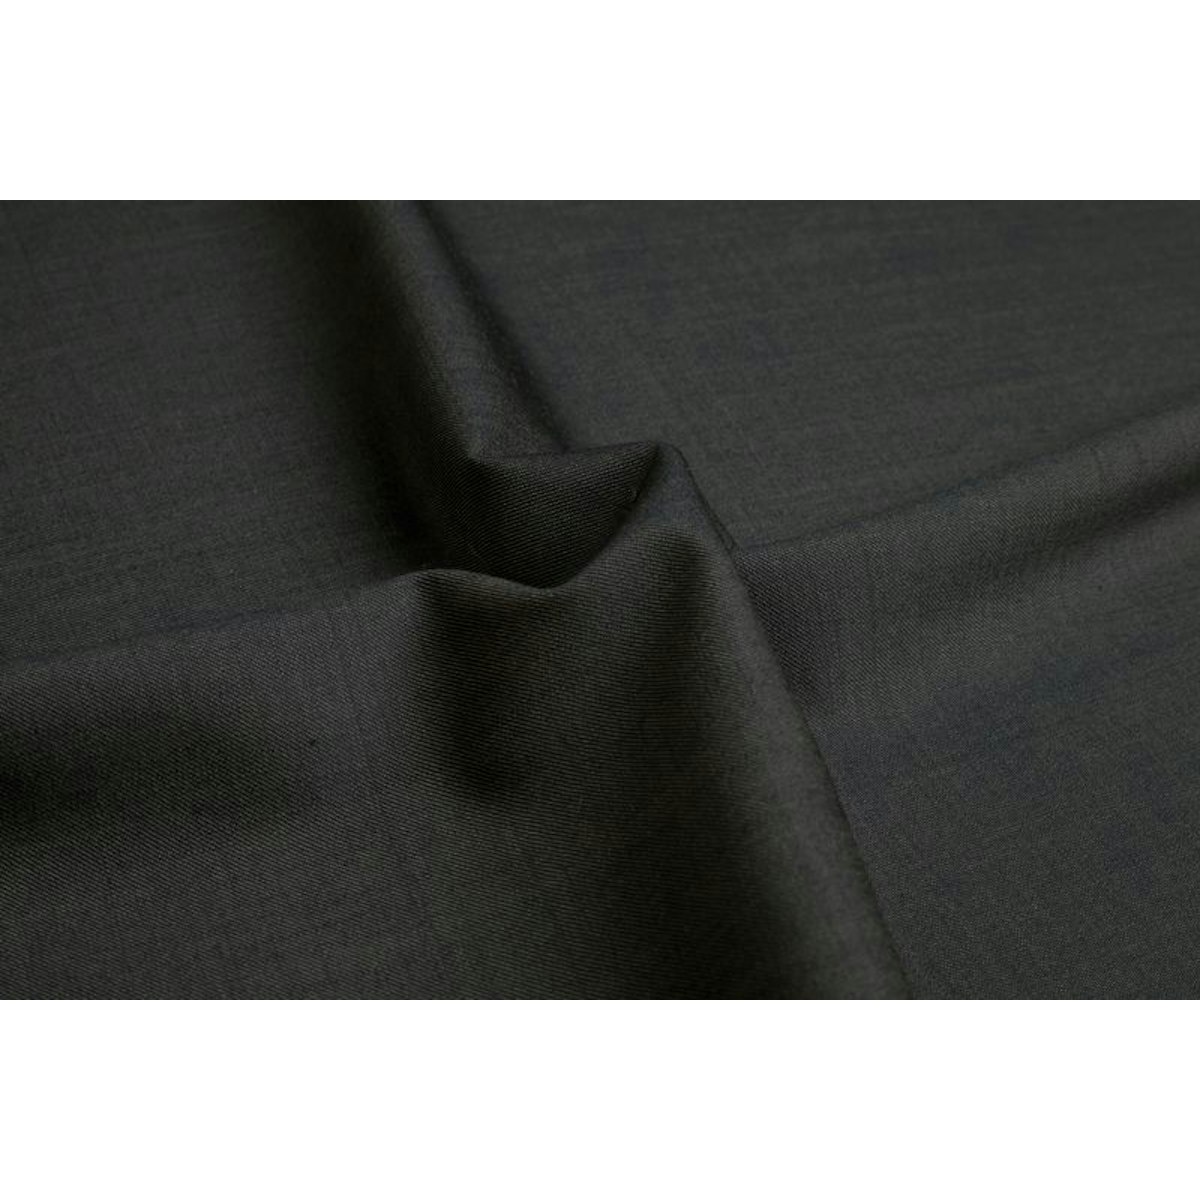 InStitchu Suit Fabric 9